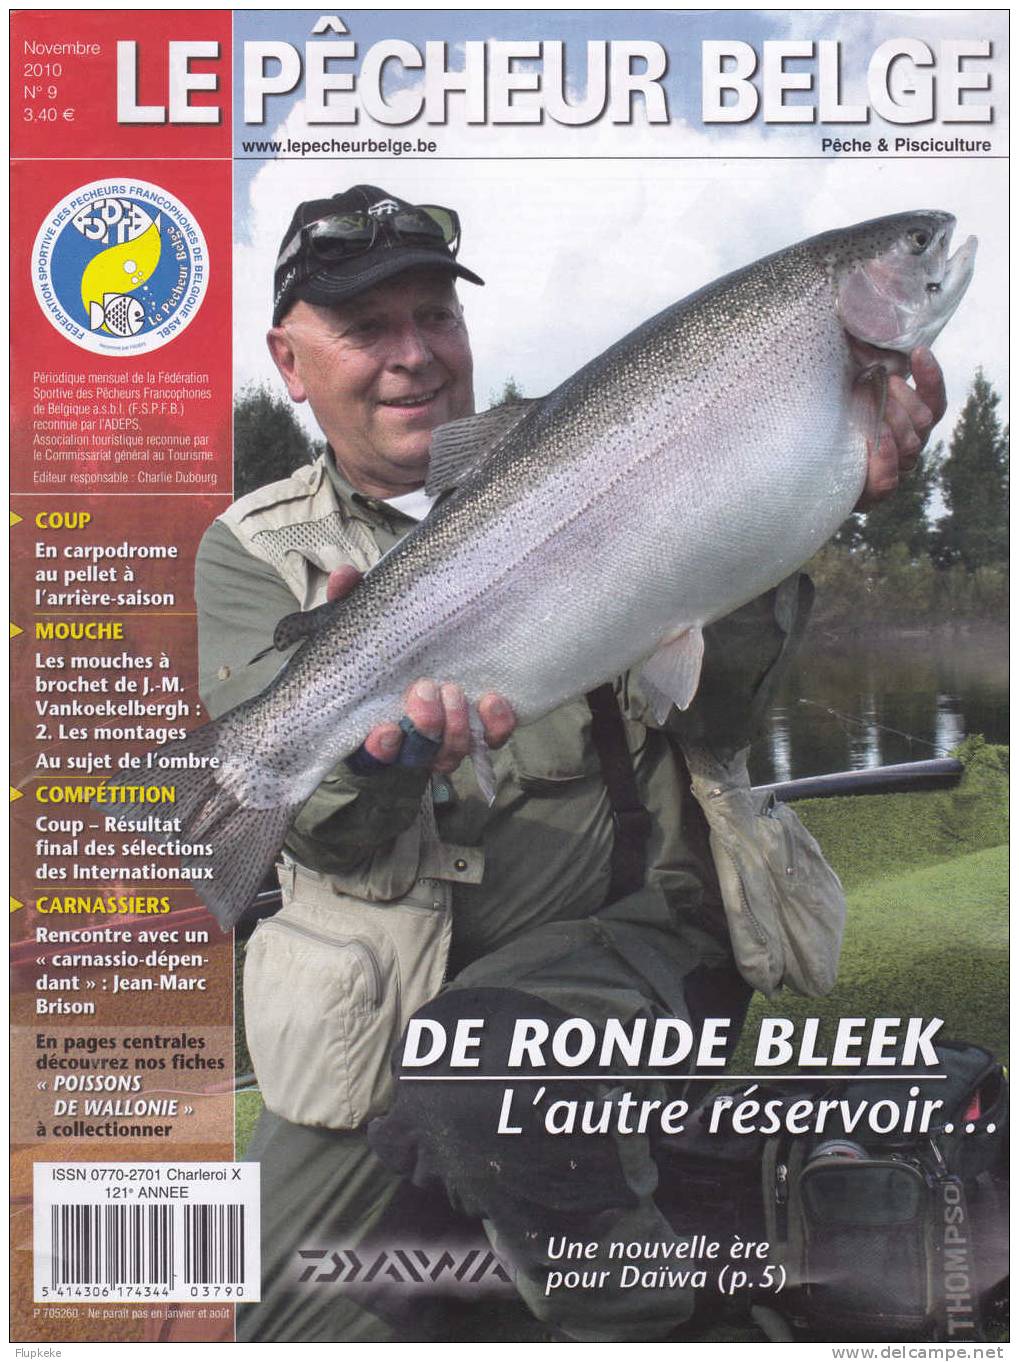 Le Pêcheur Belge 9 Novembre 2010 De Ronde Bleek - Jagen En Vissen